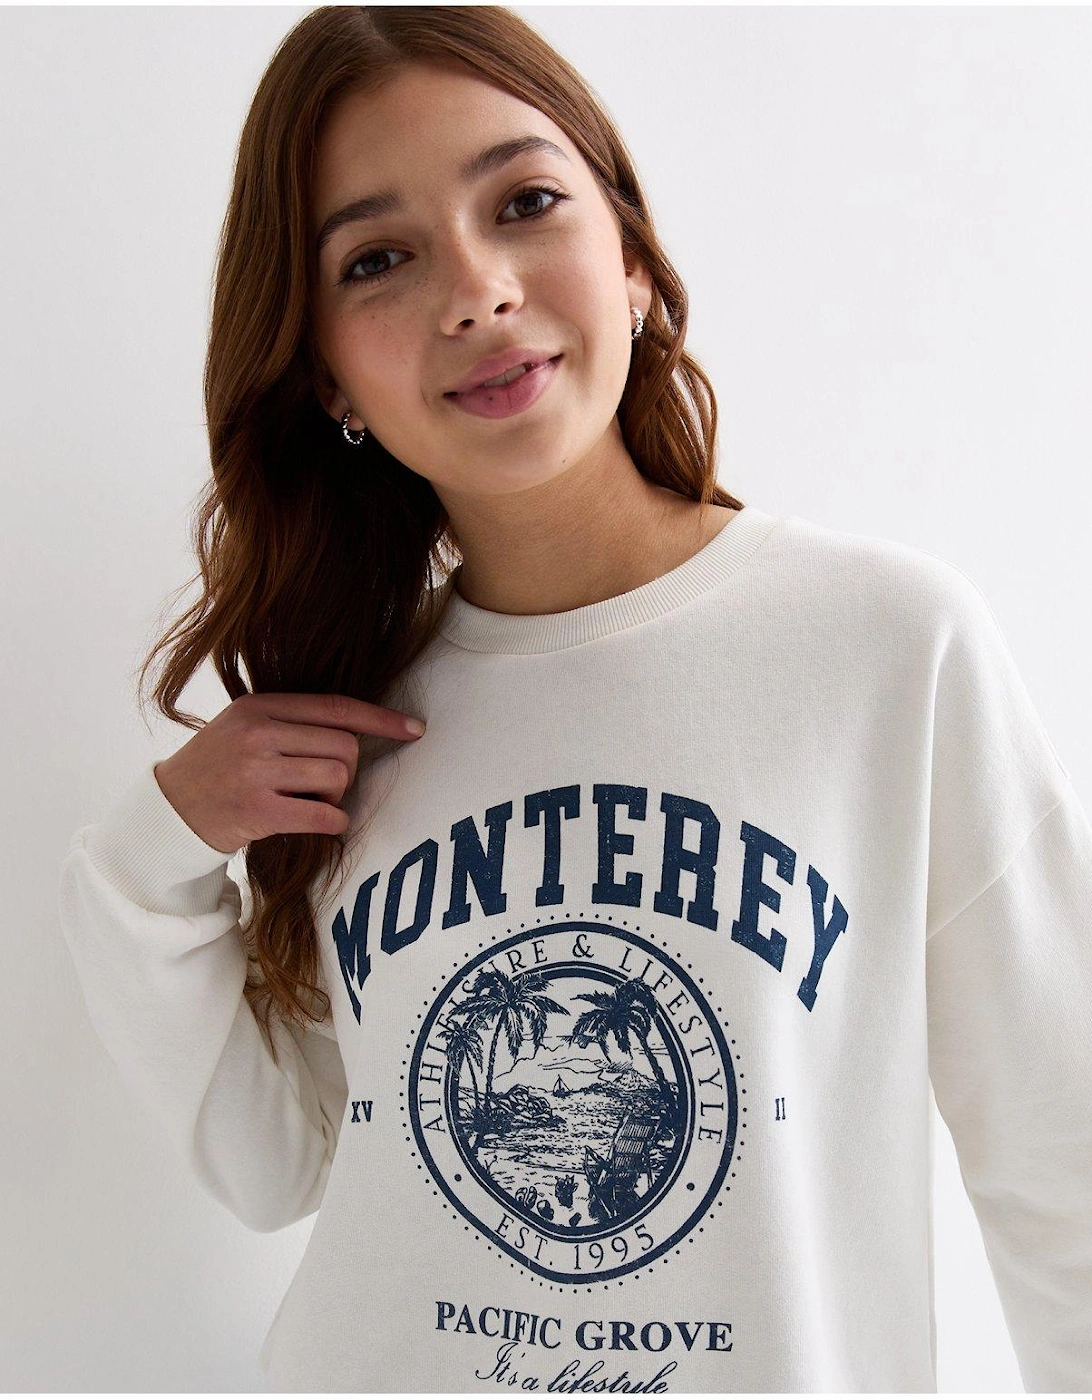 Girls Cream Monterey Logo Crew Neck Sweatshirt